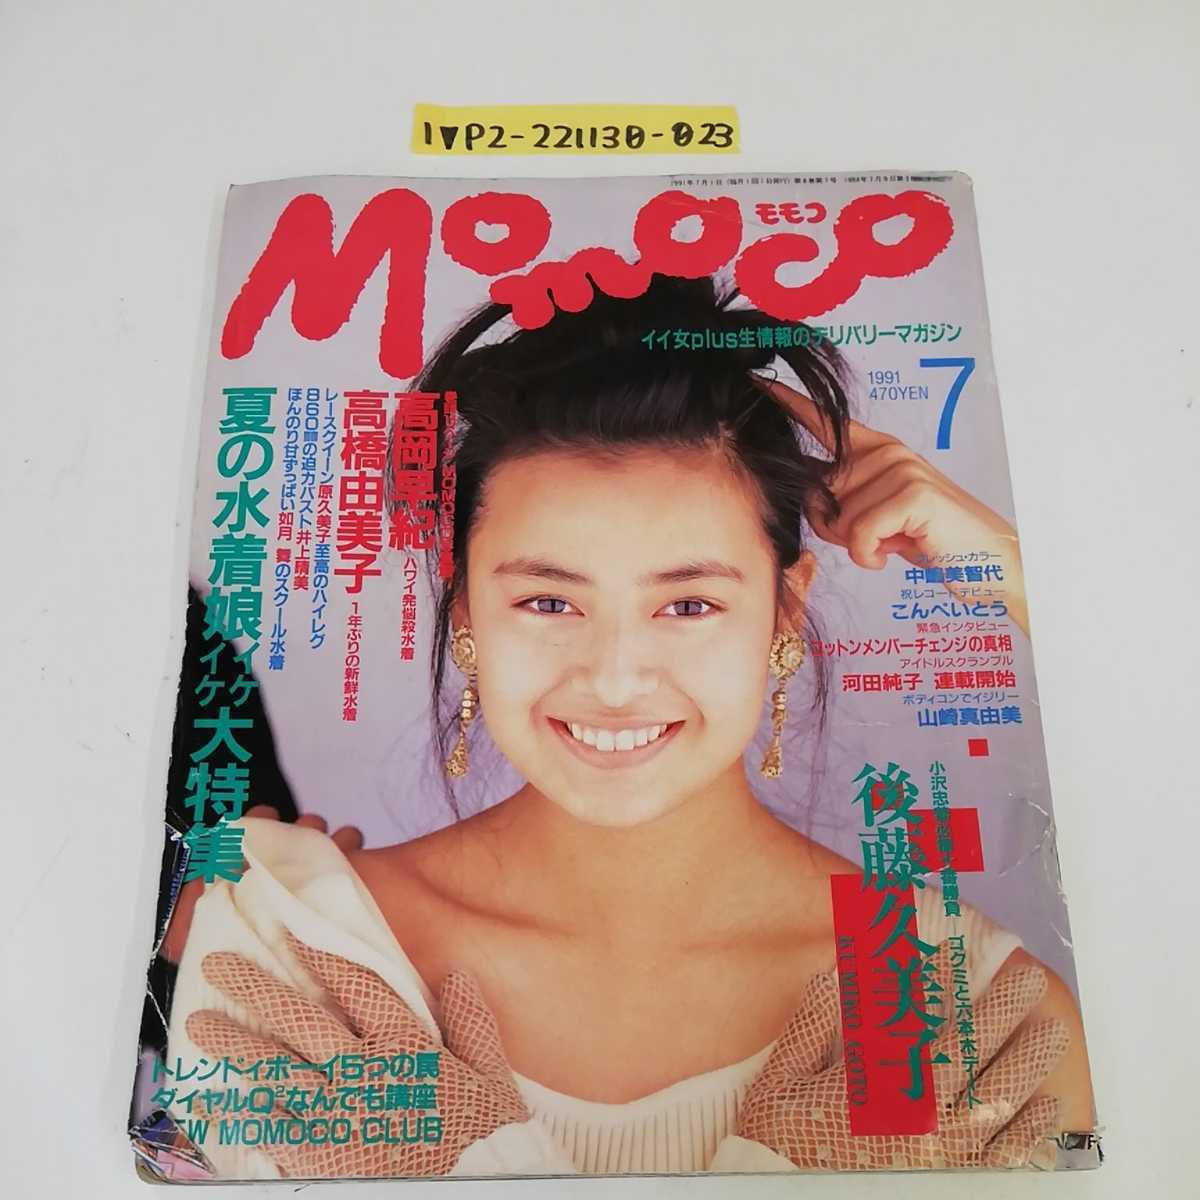 1_V Momoko Momoco 1991 год 7 месяц номер эпоха Heisei 3 год 7 месяц 1 день выпуск Inoue Harumi takada .. Takahashi Yumiko Goto Kumiko 